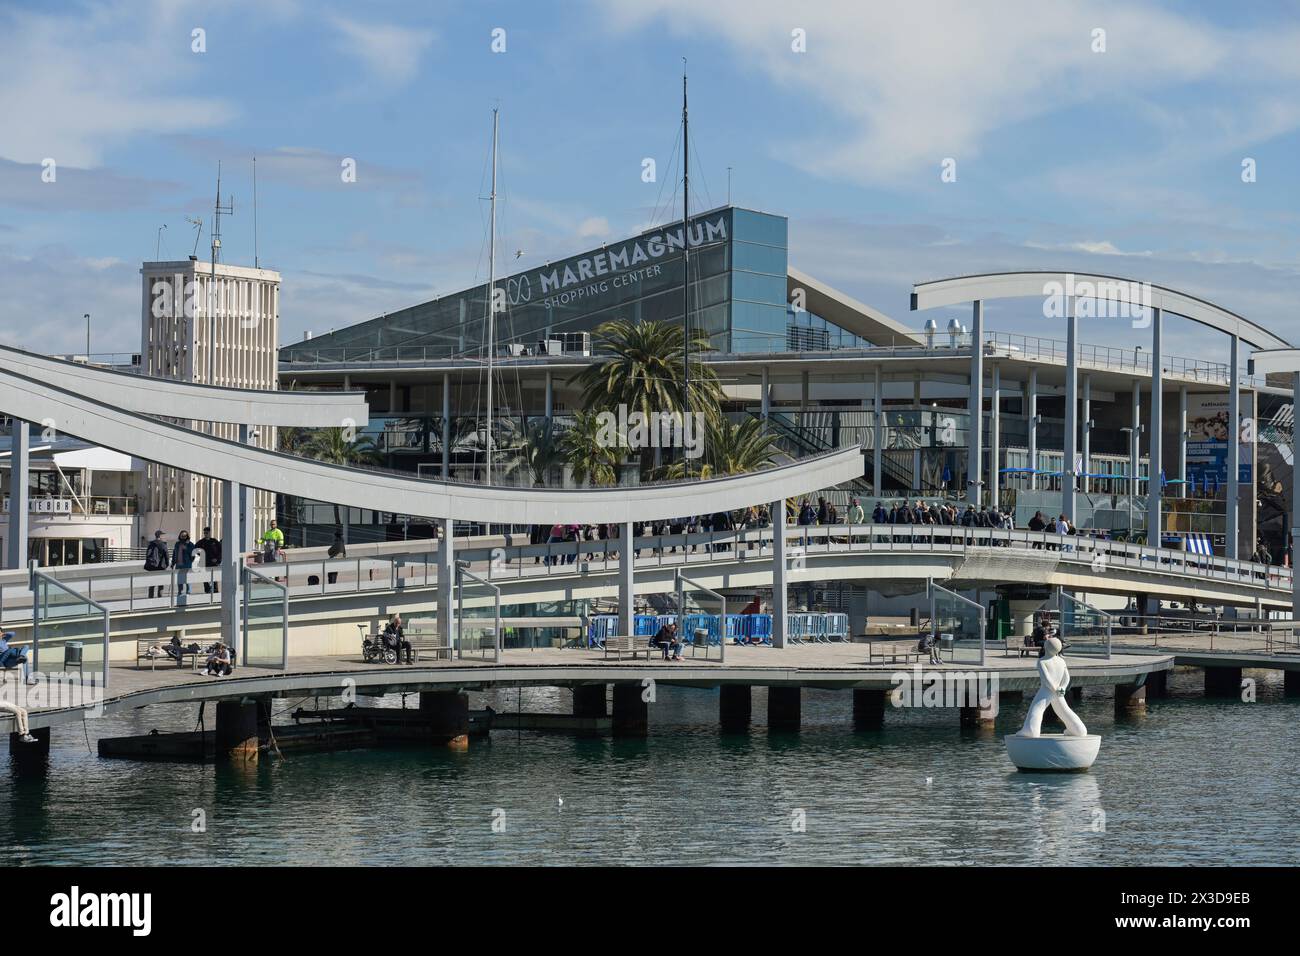 Yachthafen, Brückensteg Rambla de Mar, Maremagnum Shoppingcenter, Barcelona, Katalonien, Spanien Banque D'Images